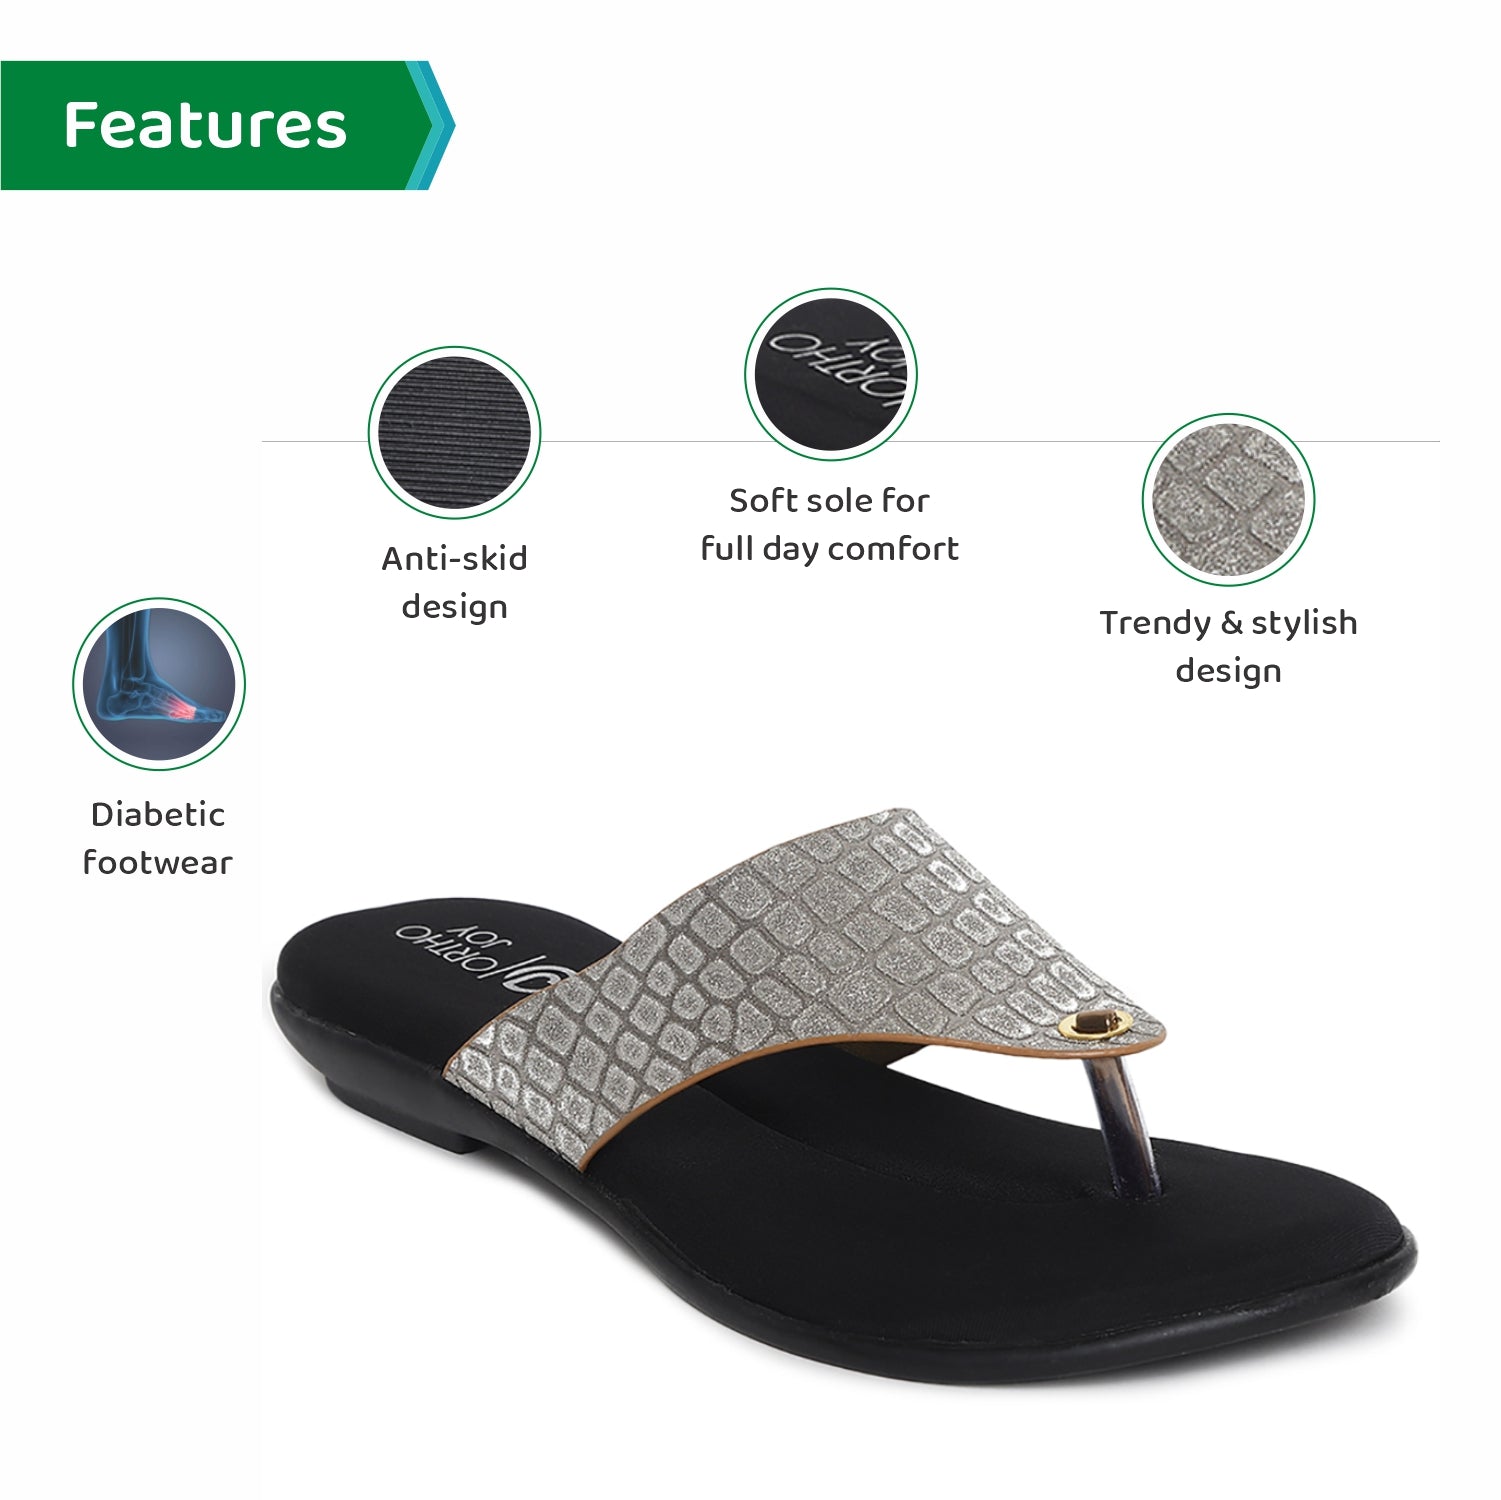 ORTHO JOY Fancy doctor Casual slippers for women